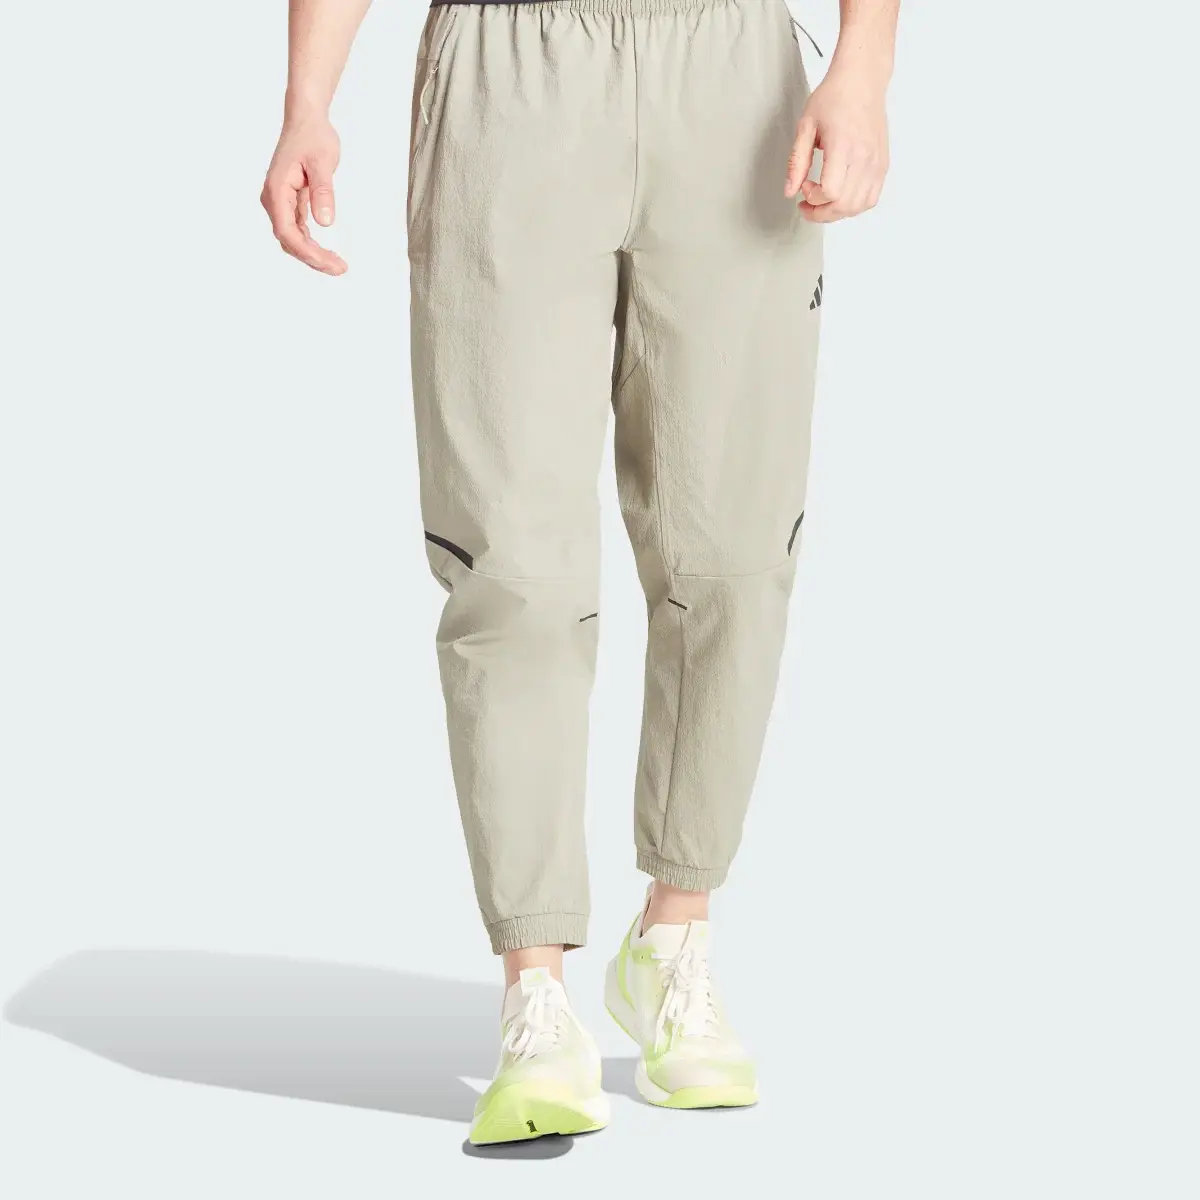 Adidas Pantaloni Designed for Training adistrong Workout. 1